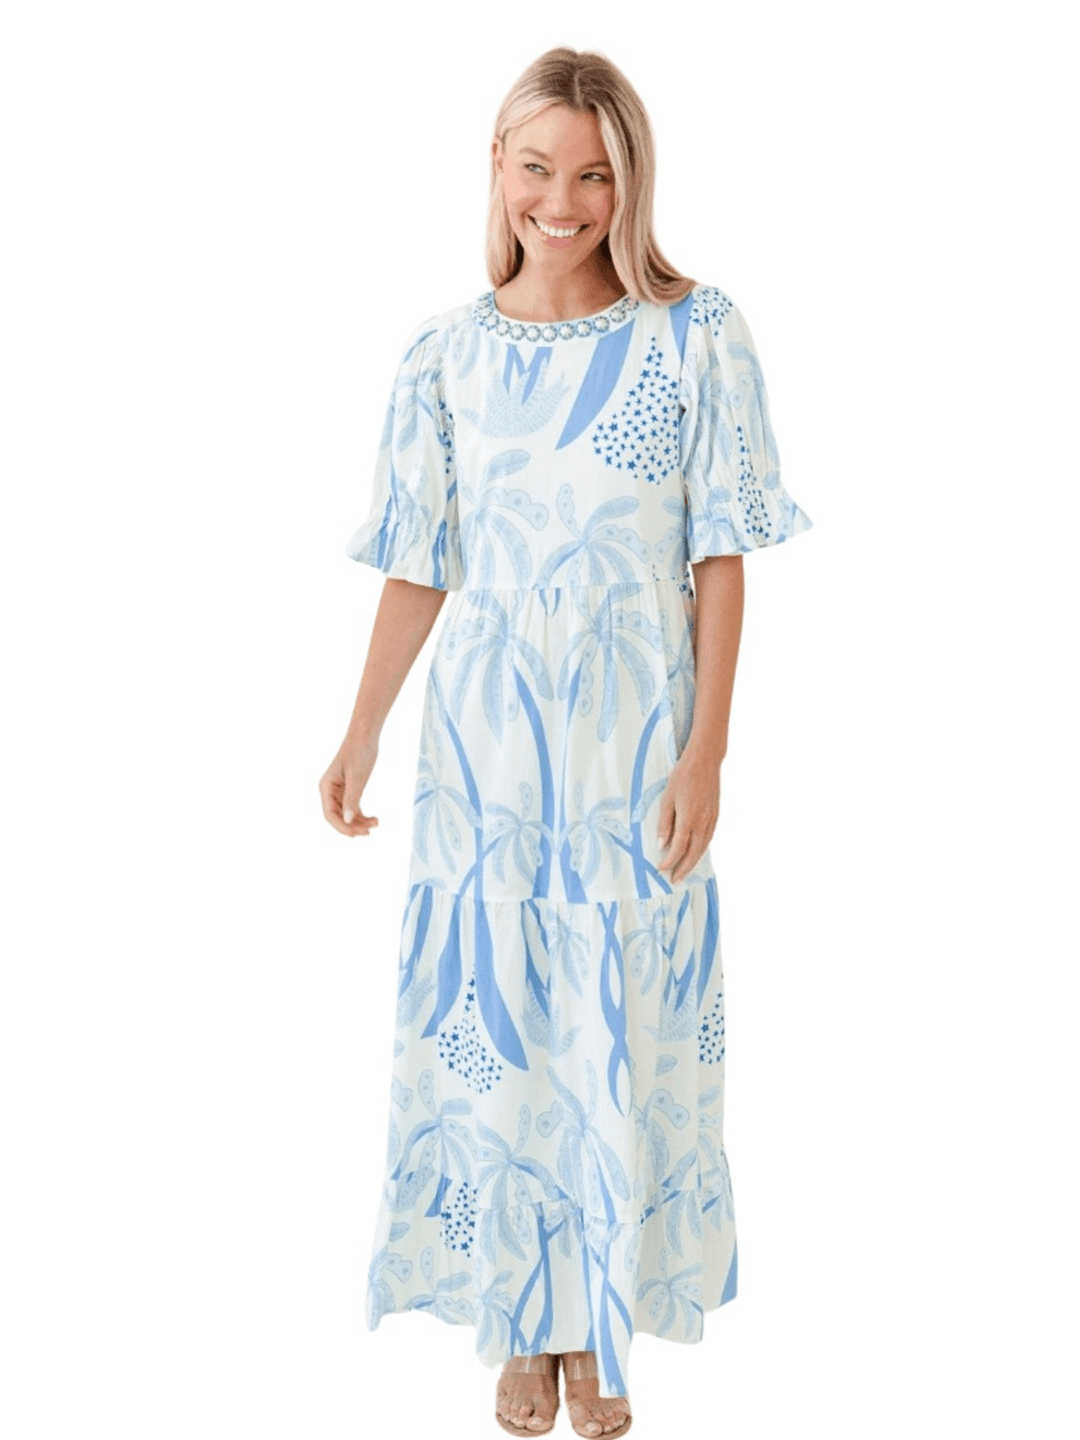 Sheridan French Dress Michola Dress in Coastal Palm